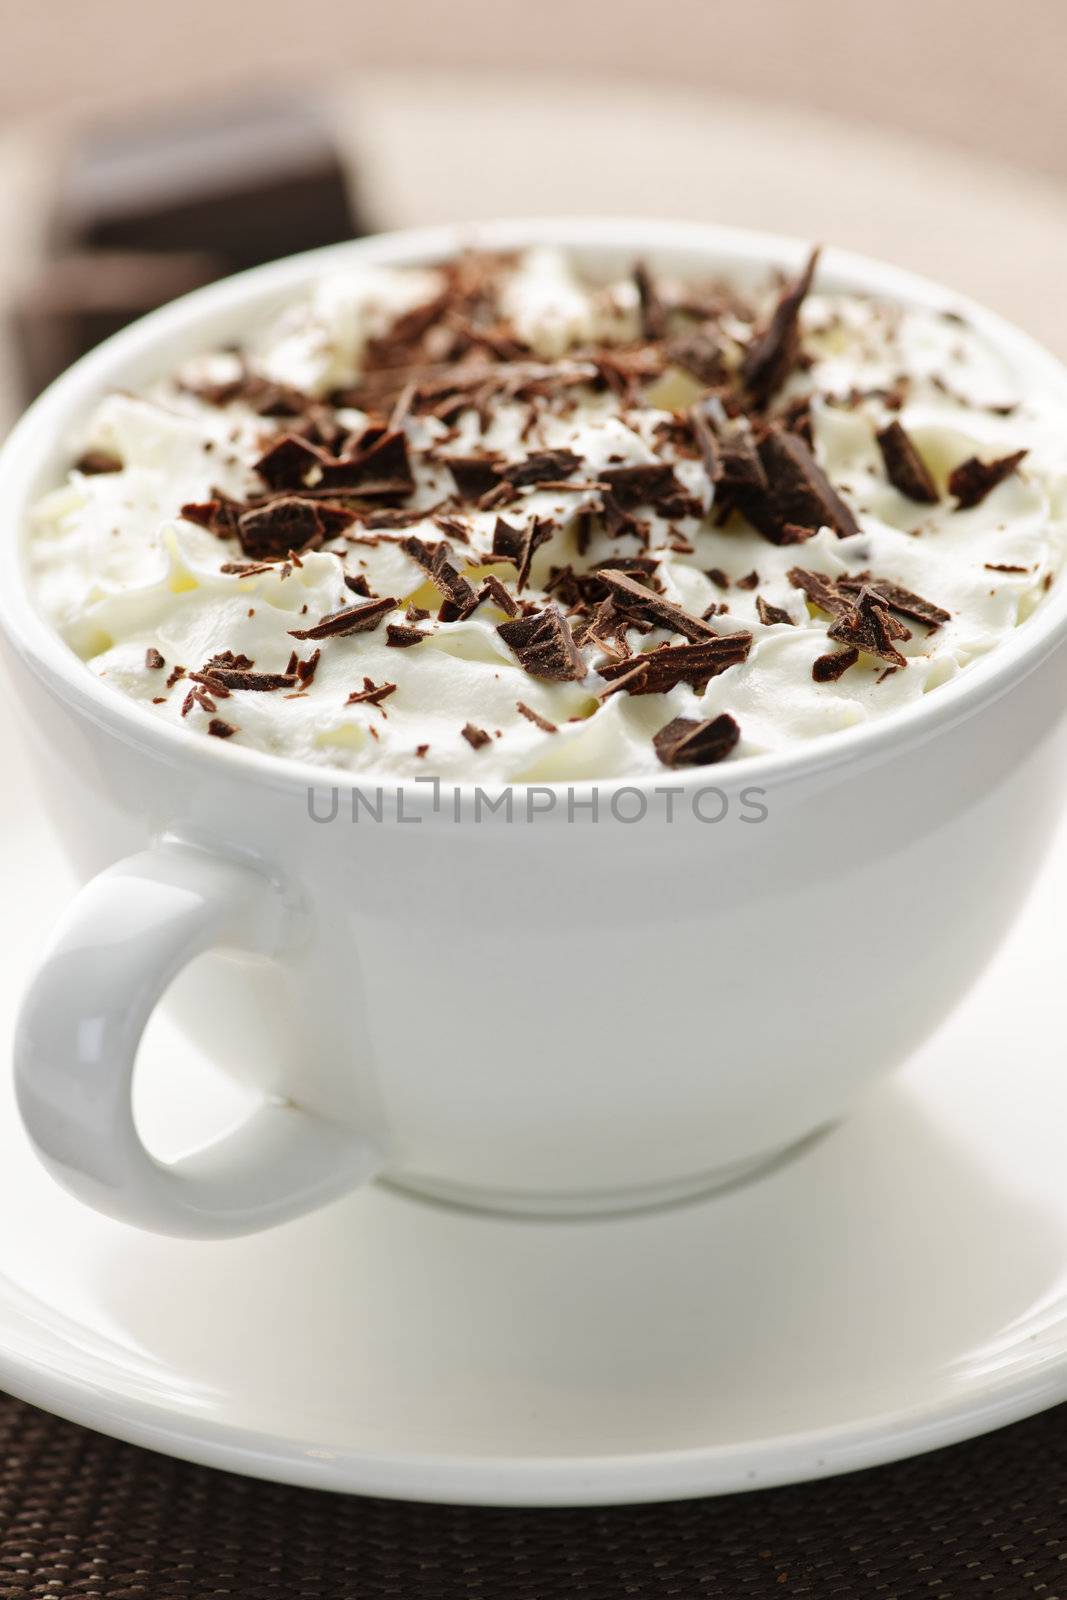 Hot chocolate by elenathewise